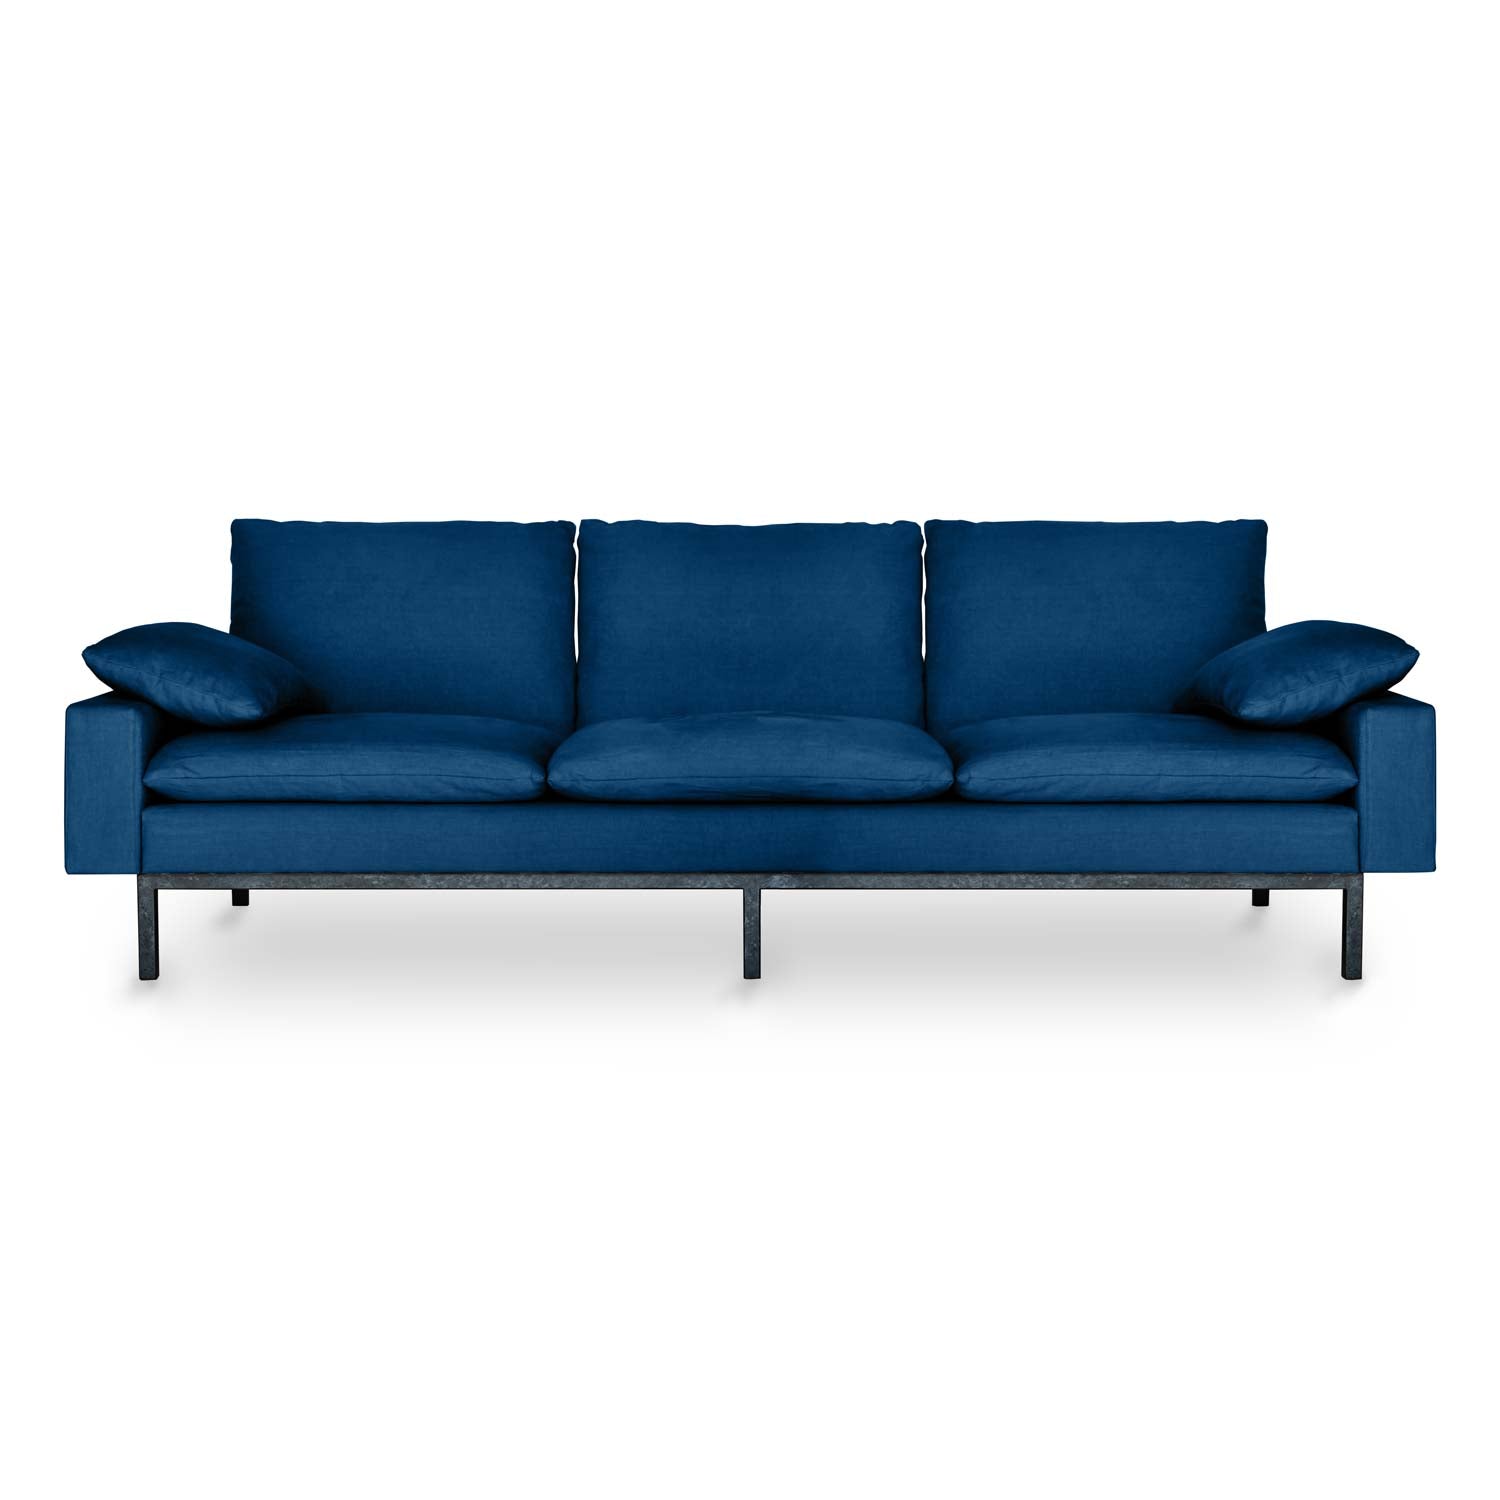 Streamlined Elegance in Every Detail. navy blue organic sofa